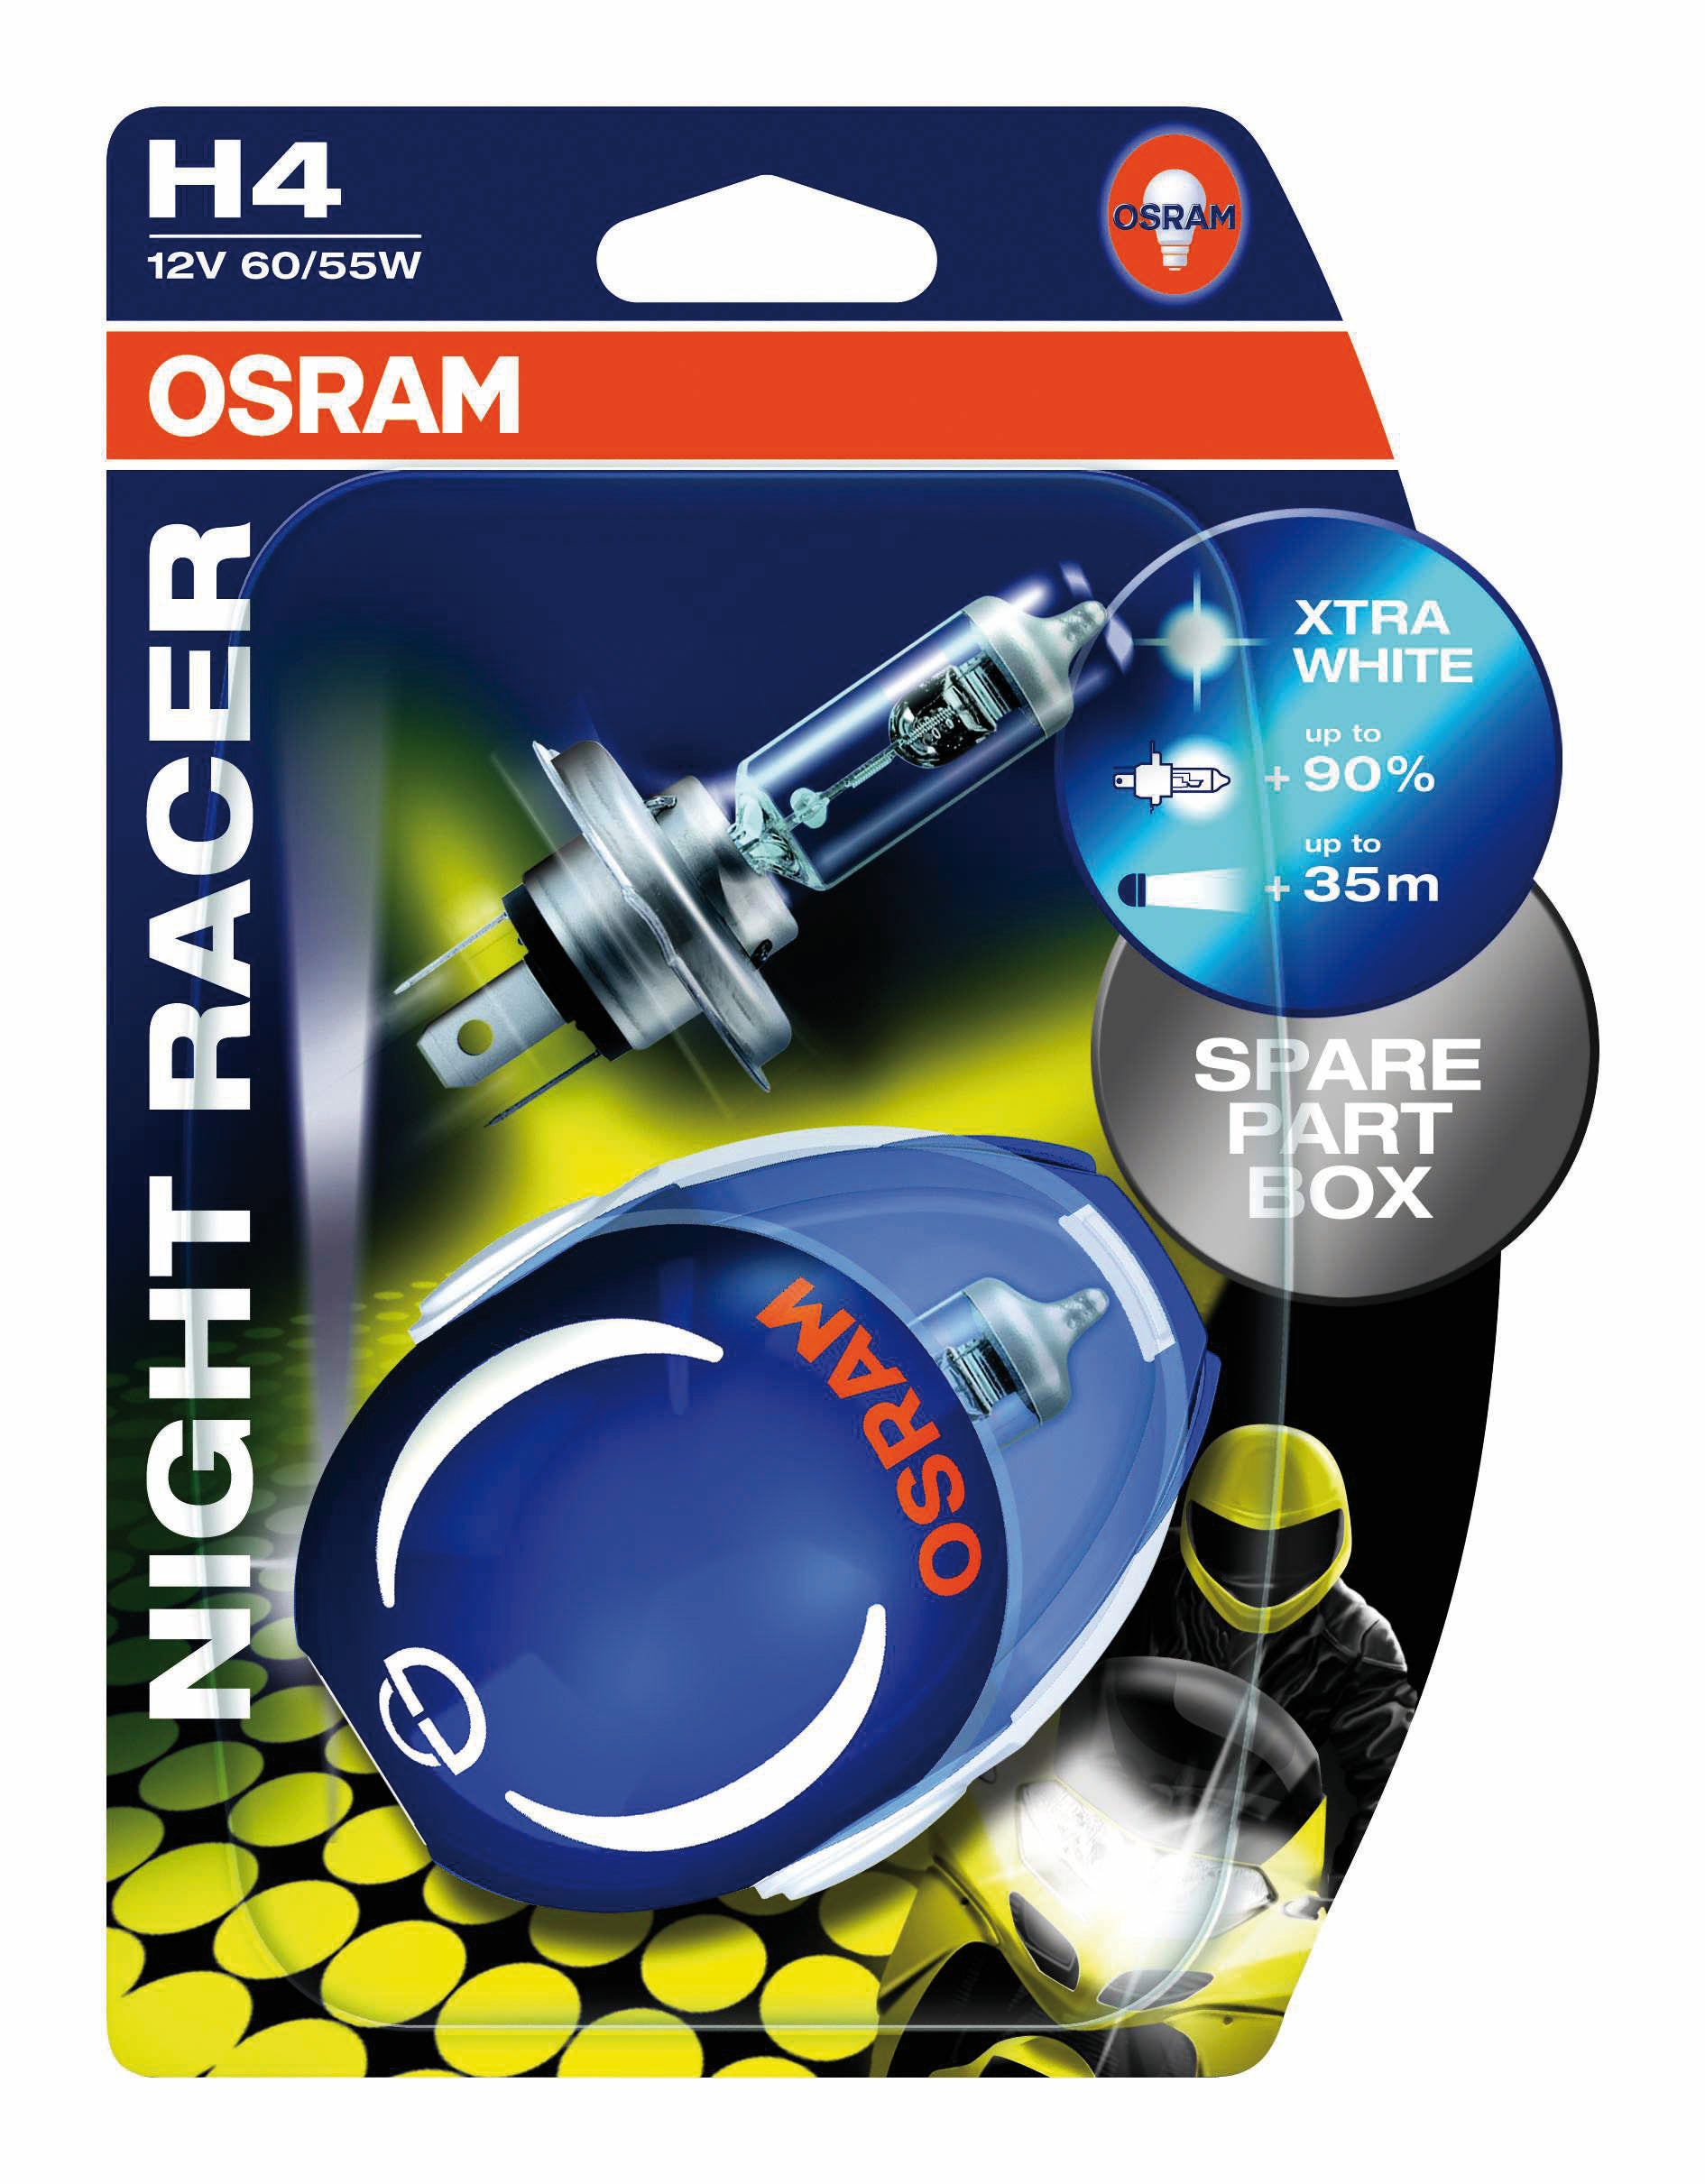 Osram h4 12v 60 55w p43t. Лампа накаливания" Night Racer 110 h4".